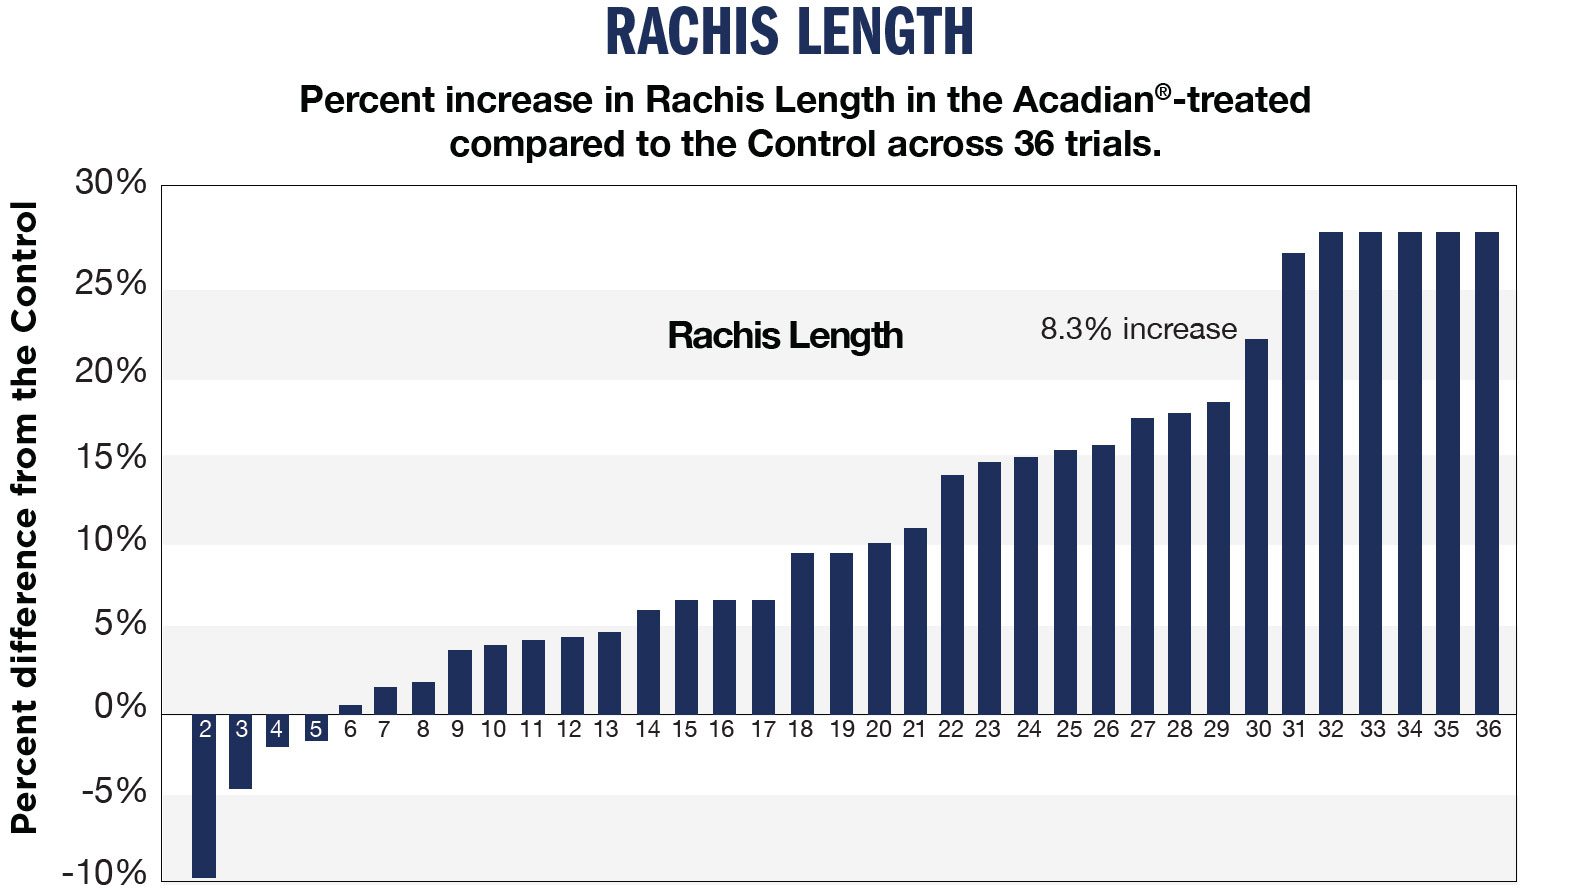 Rachis Length